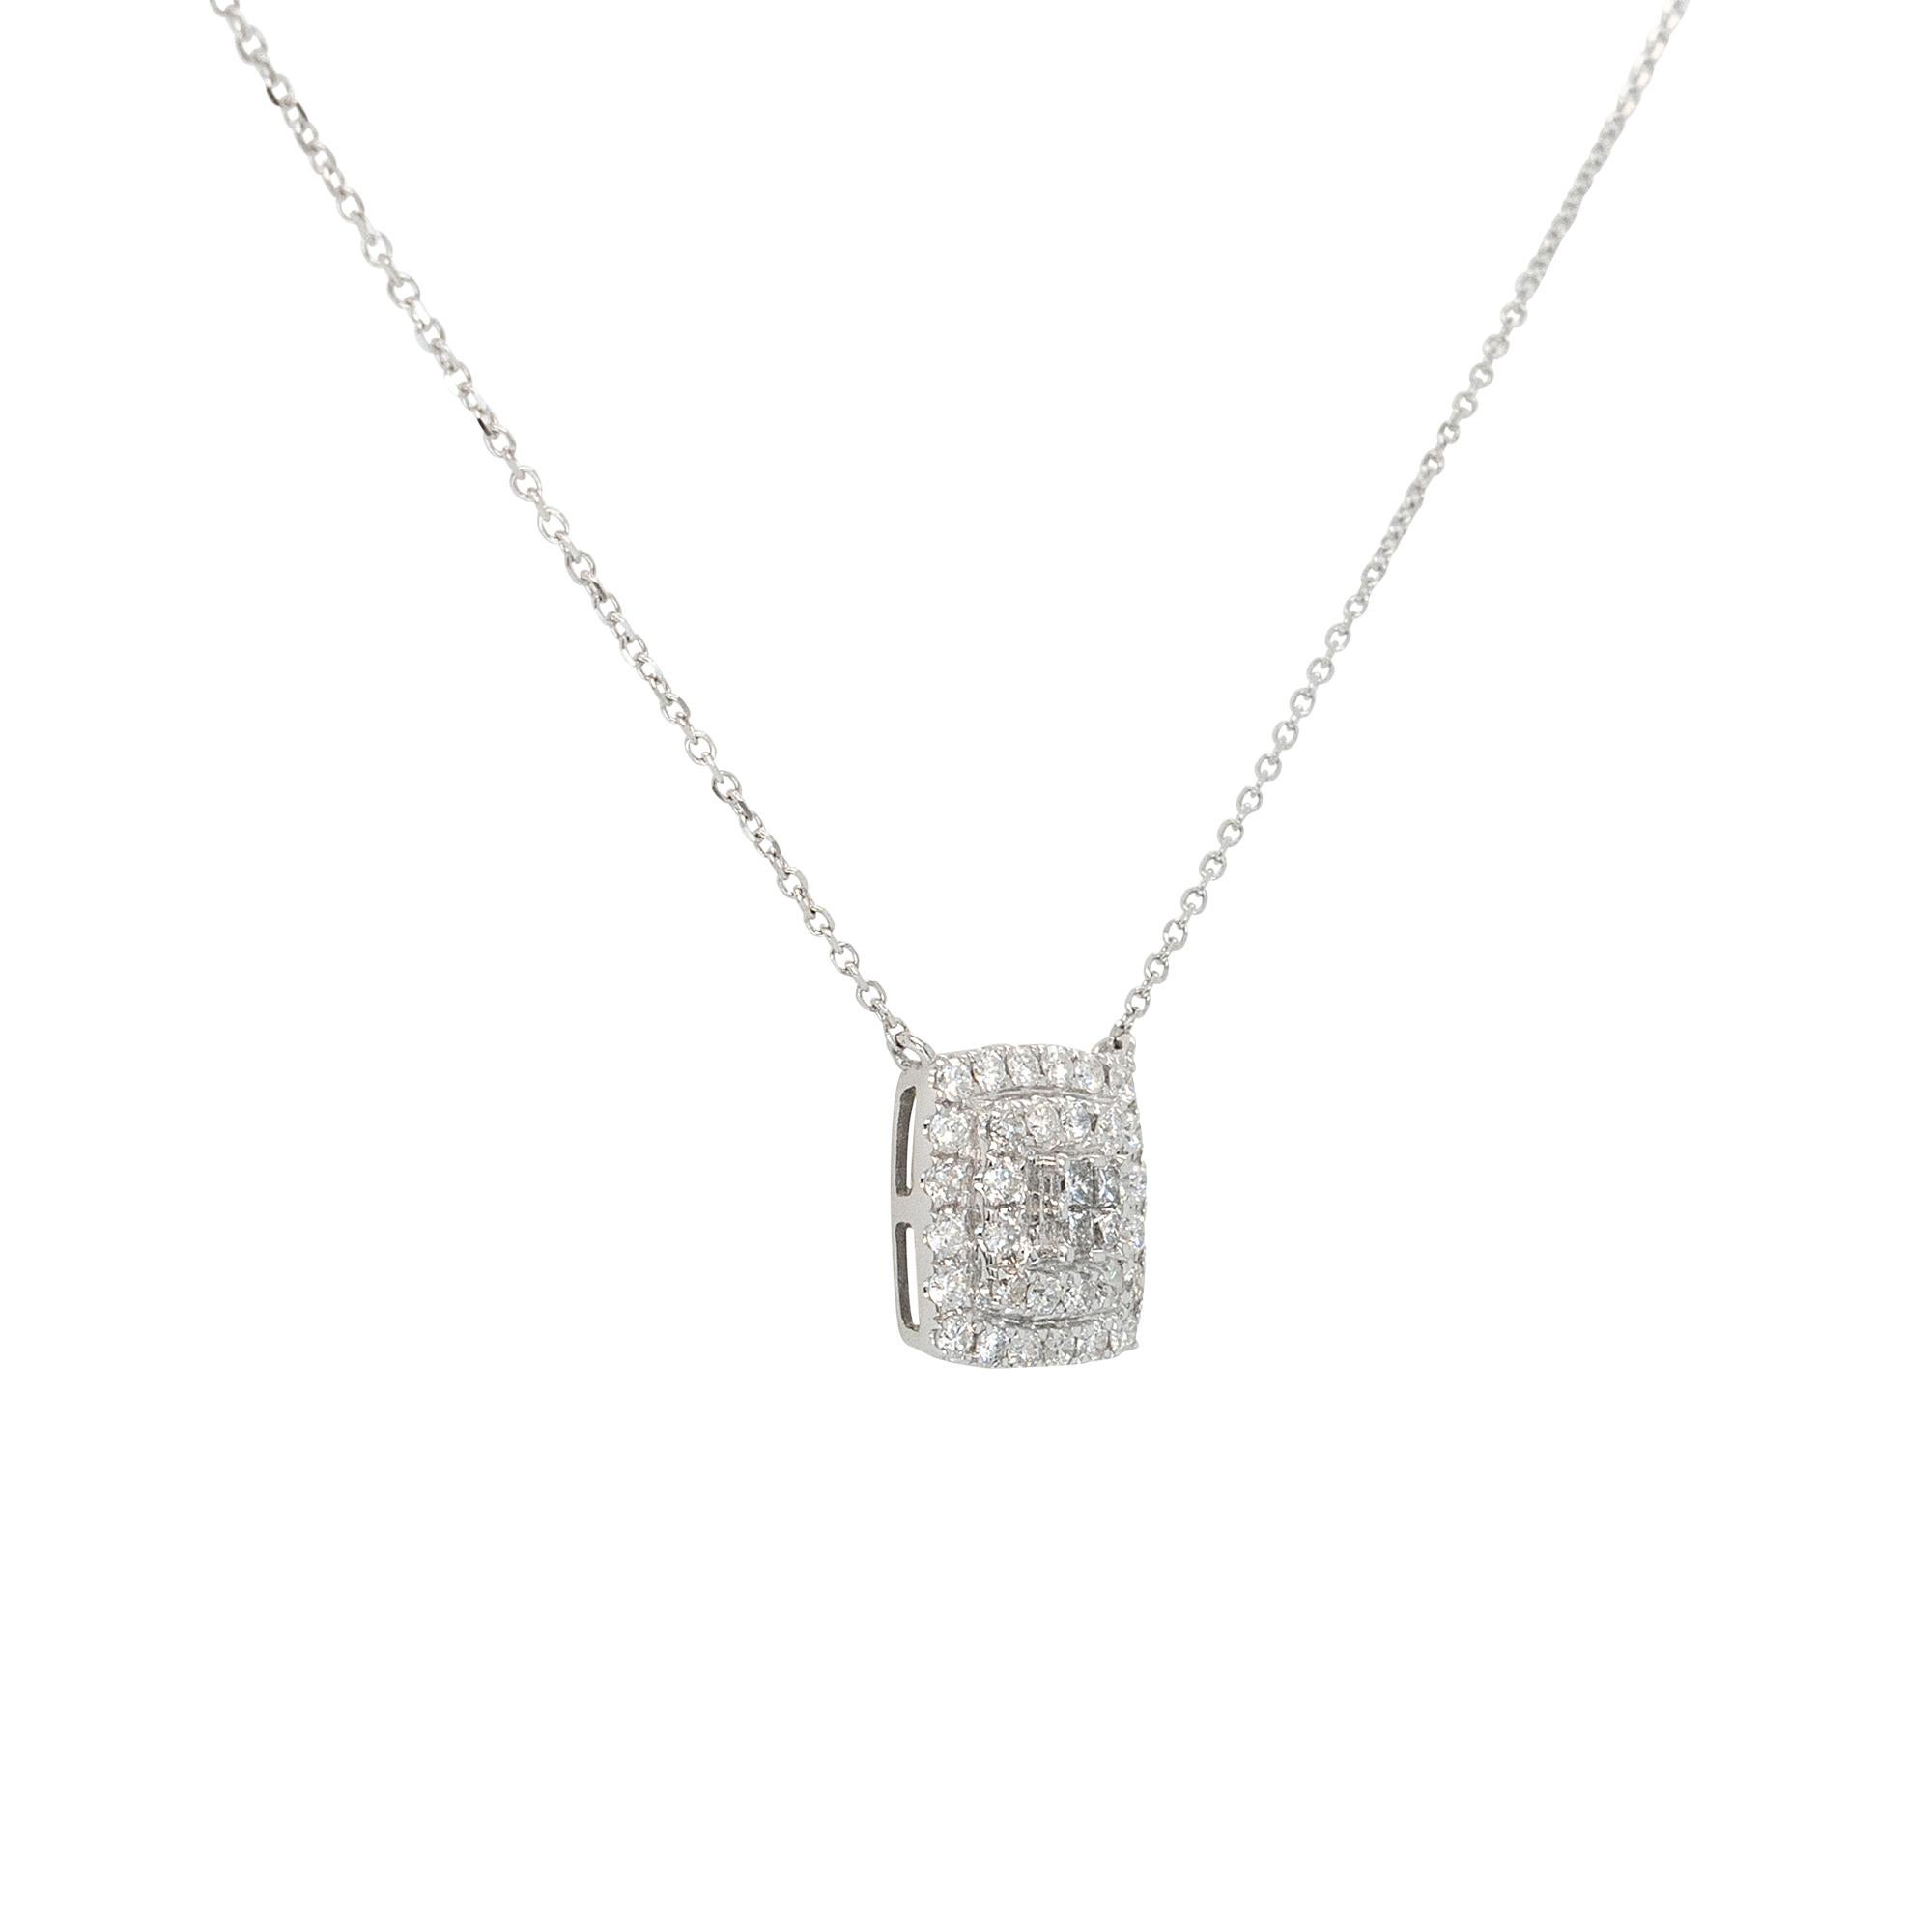 Pendant Details:
0.50ctw Round Brilliant Natural Diamonds
11mm x 5mm x11mm
Chain Details: 14k White Gold
Chain Size: 16